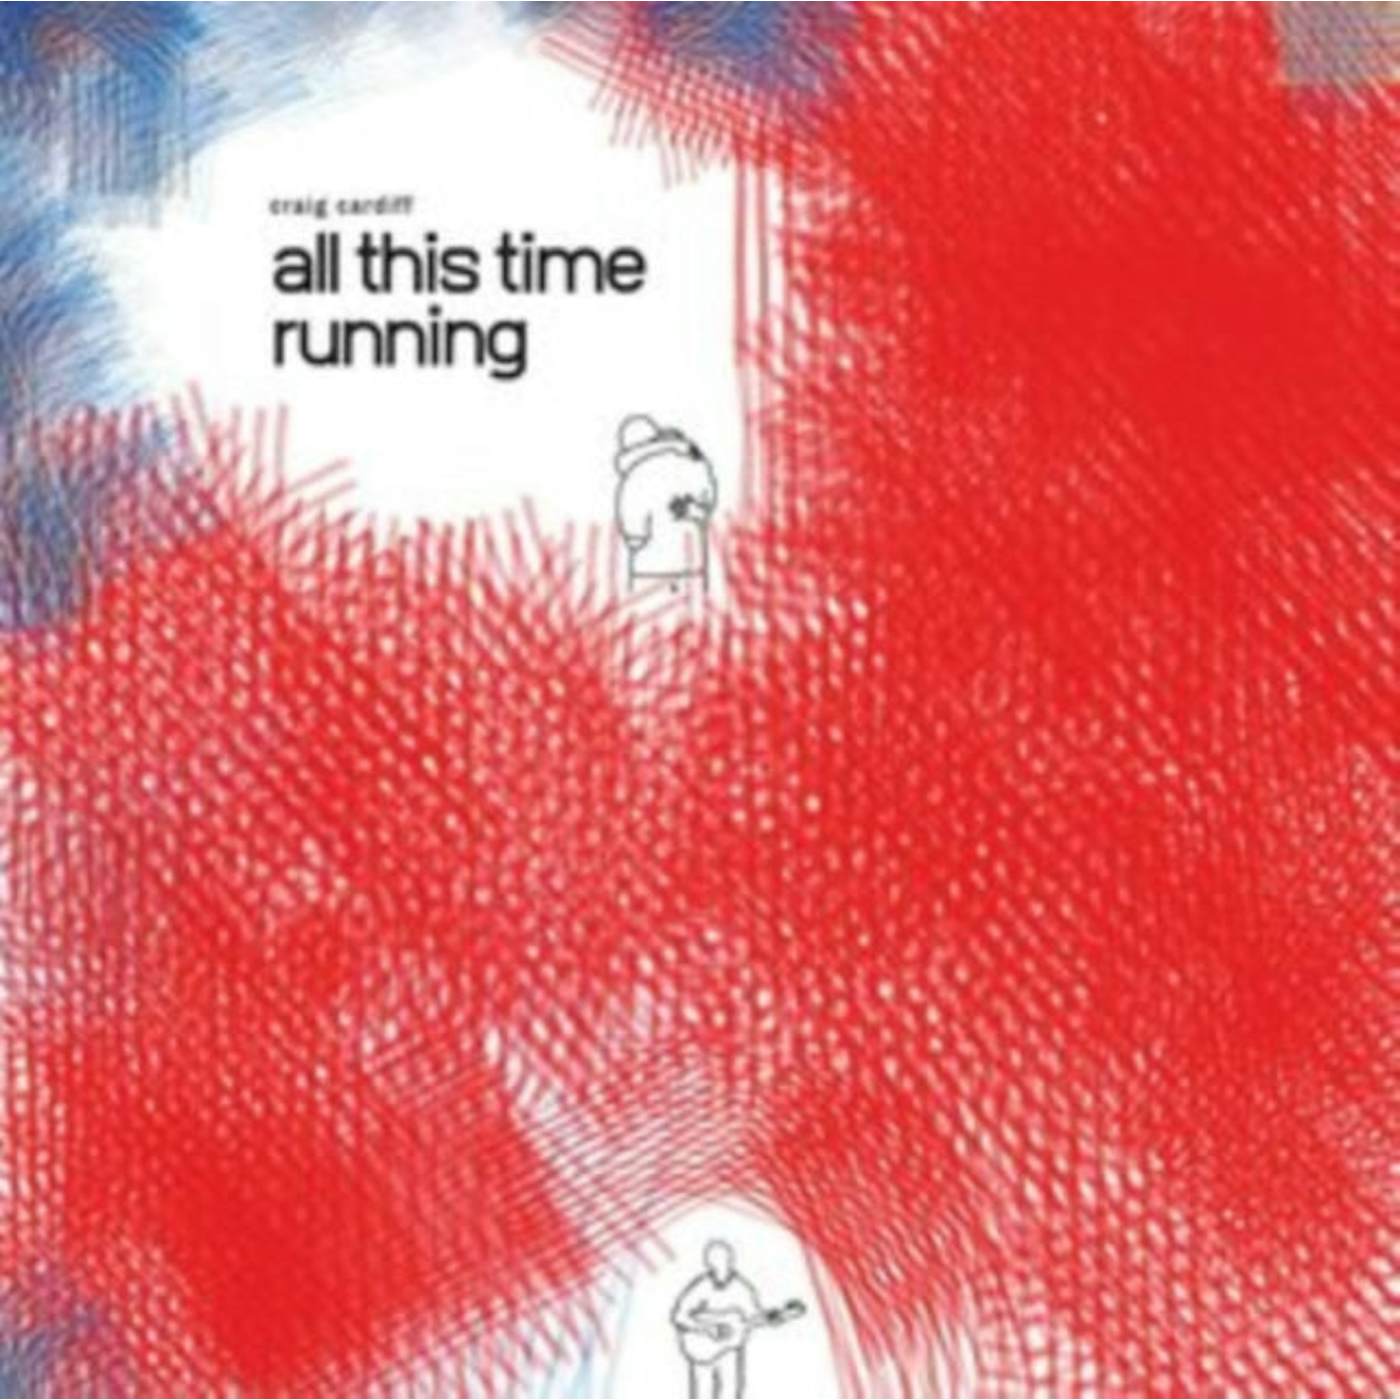 Craig Cardiff LP - All This Time Running (Vinyl)